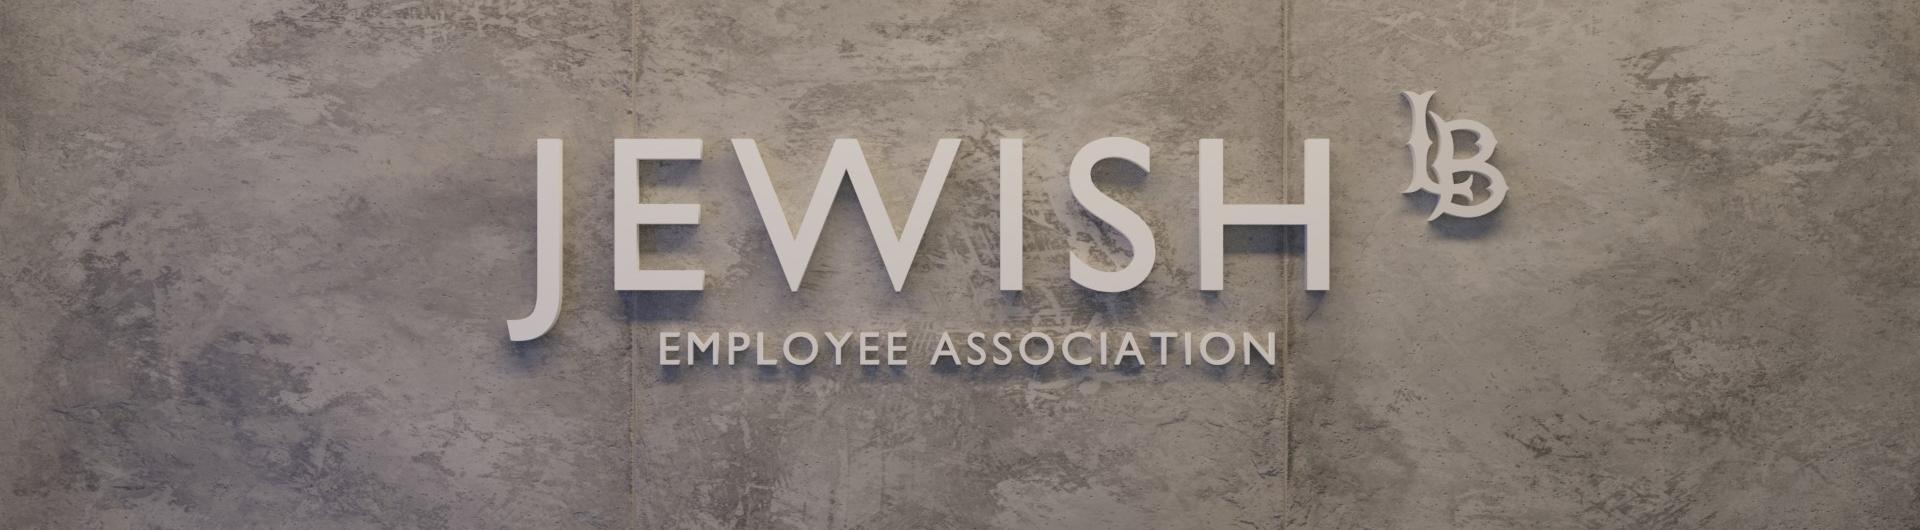 Jewish Employee Association